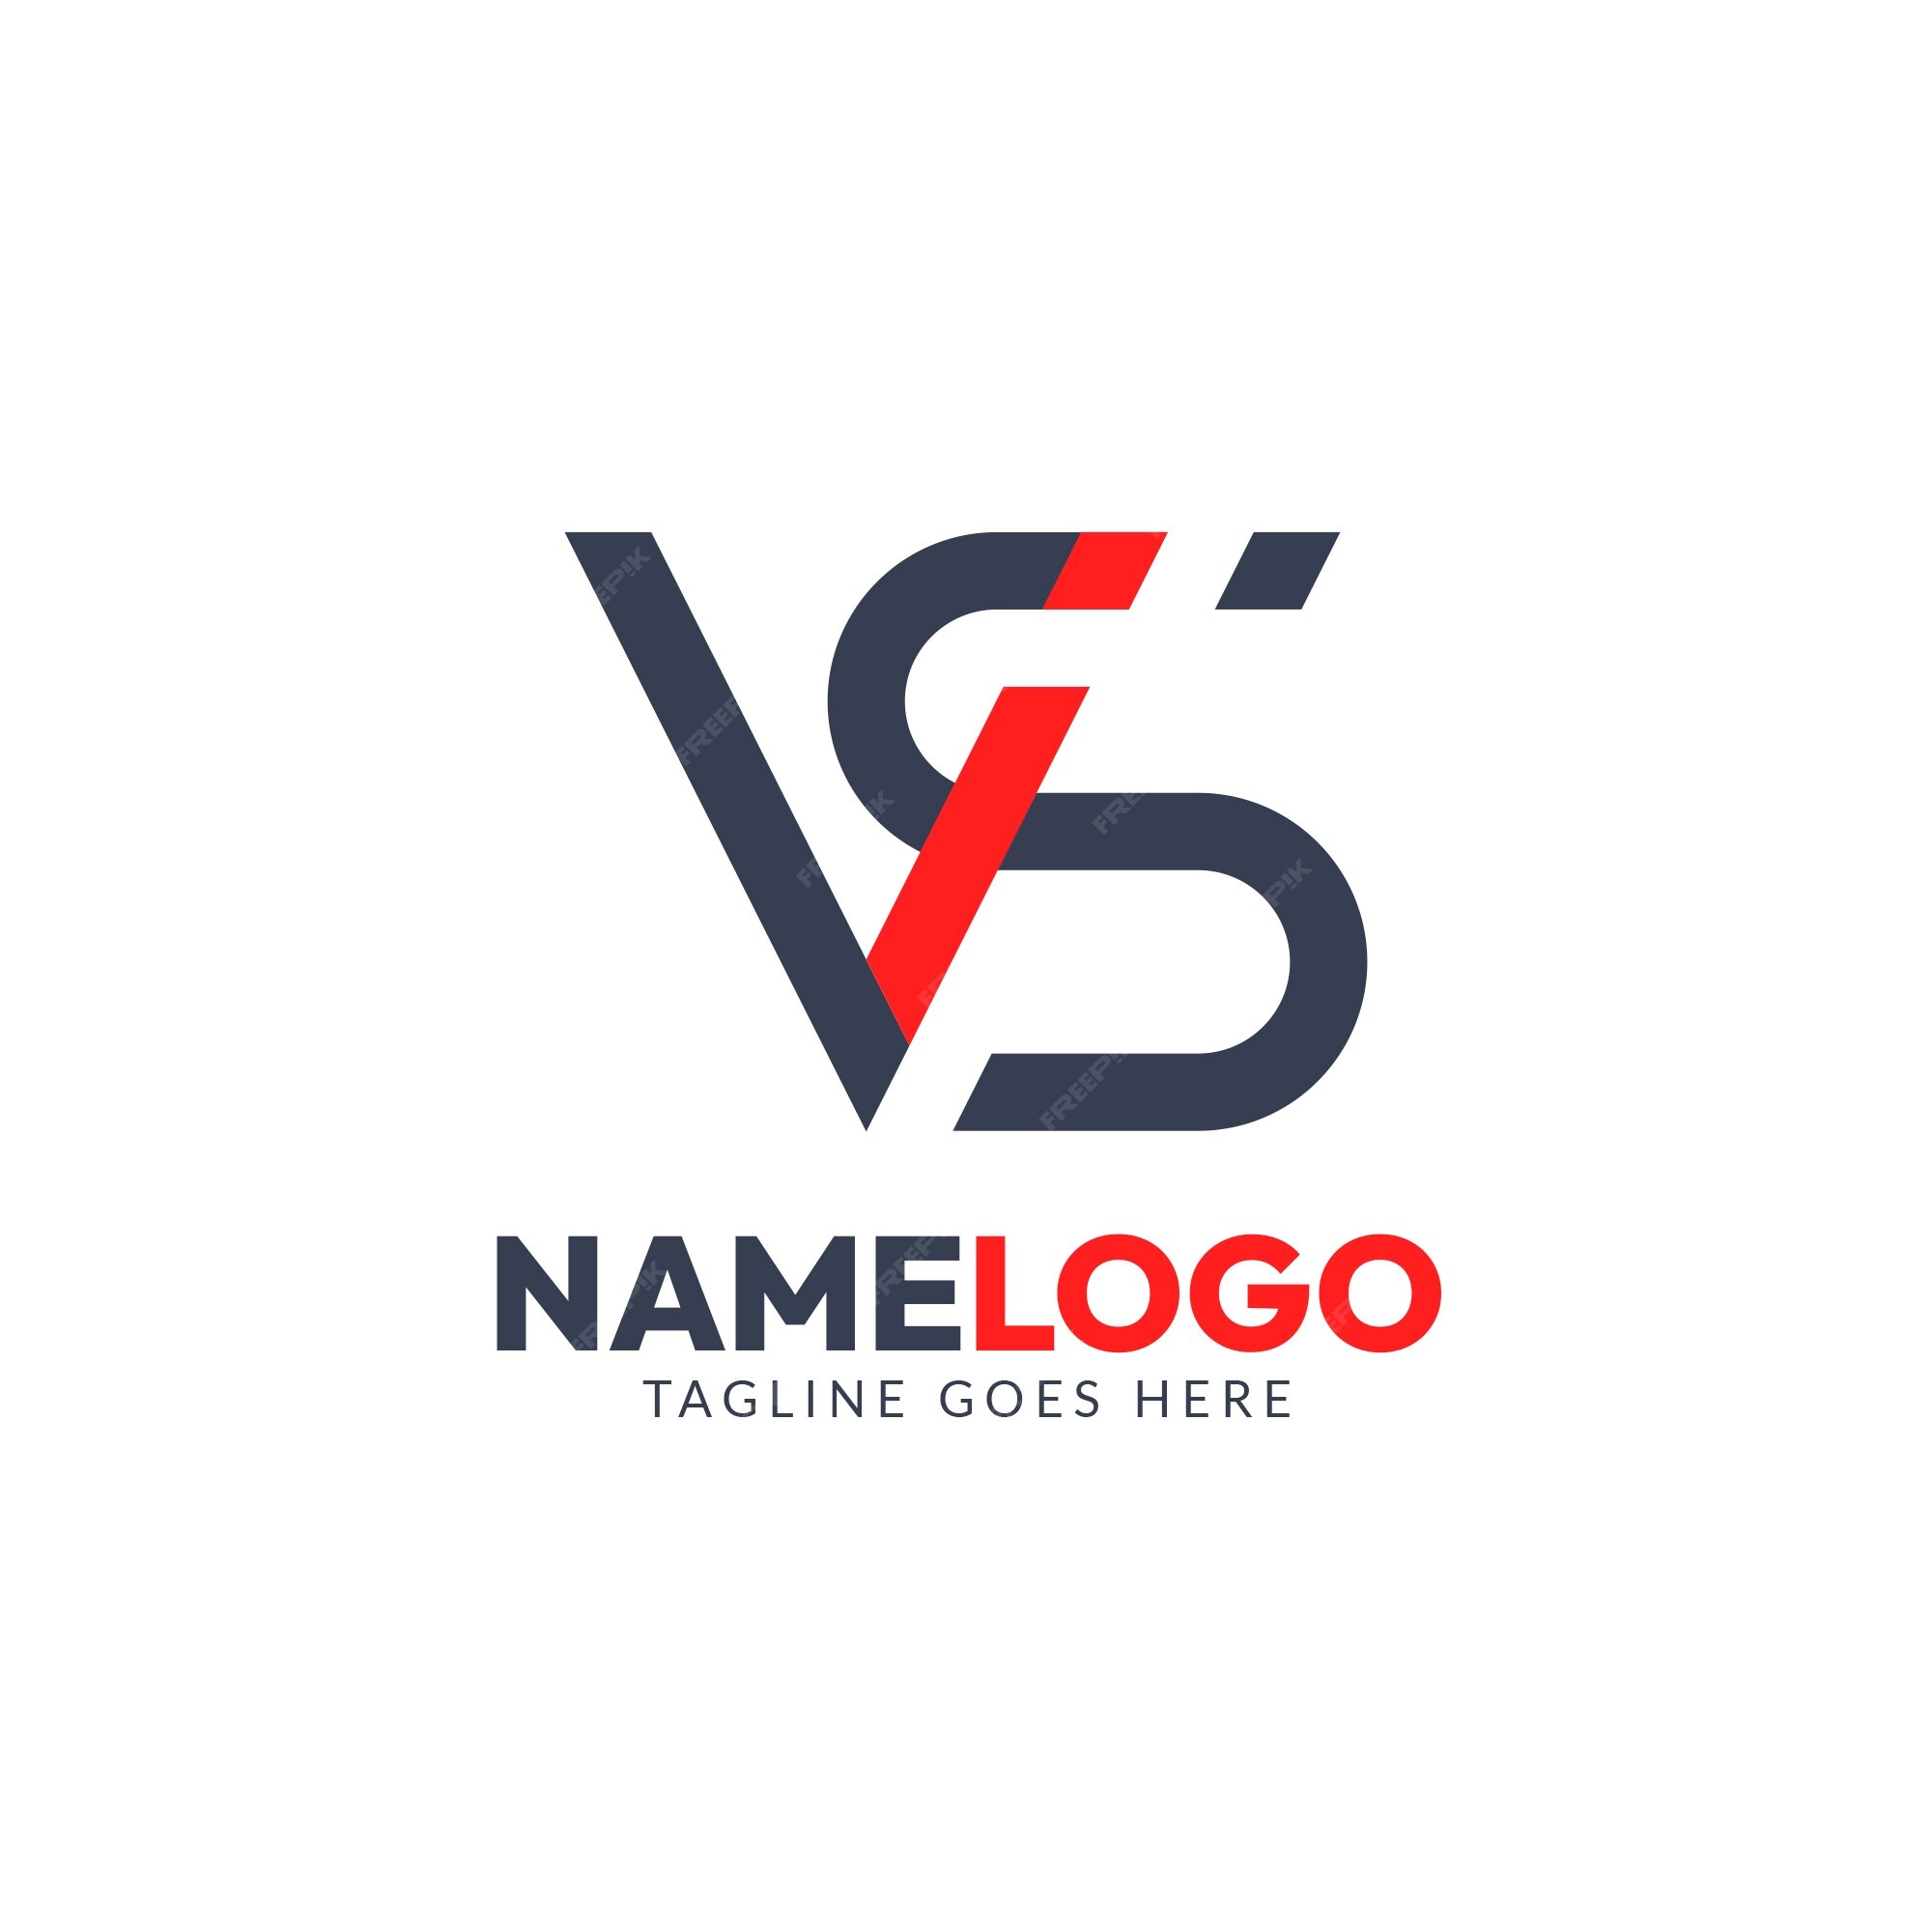 Vs logo Vectors & Illustrations for Free Download | Freepik